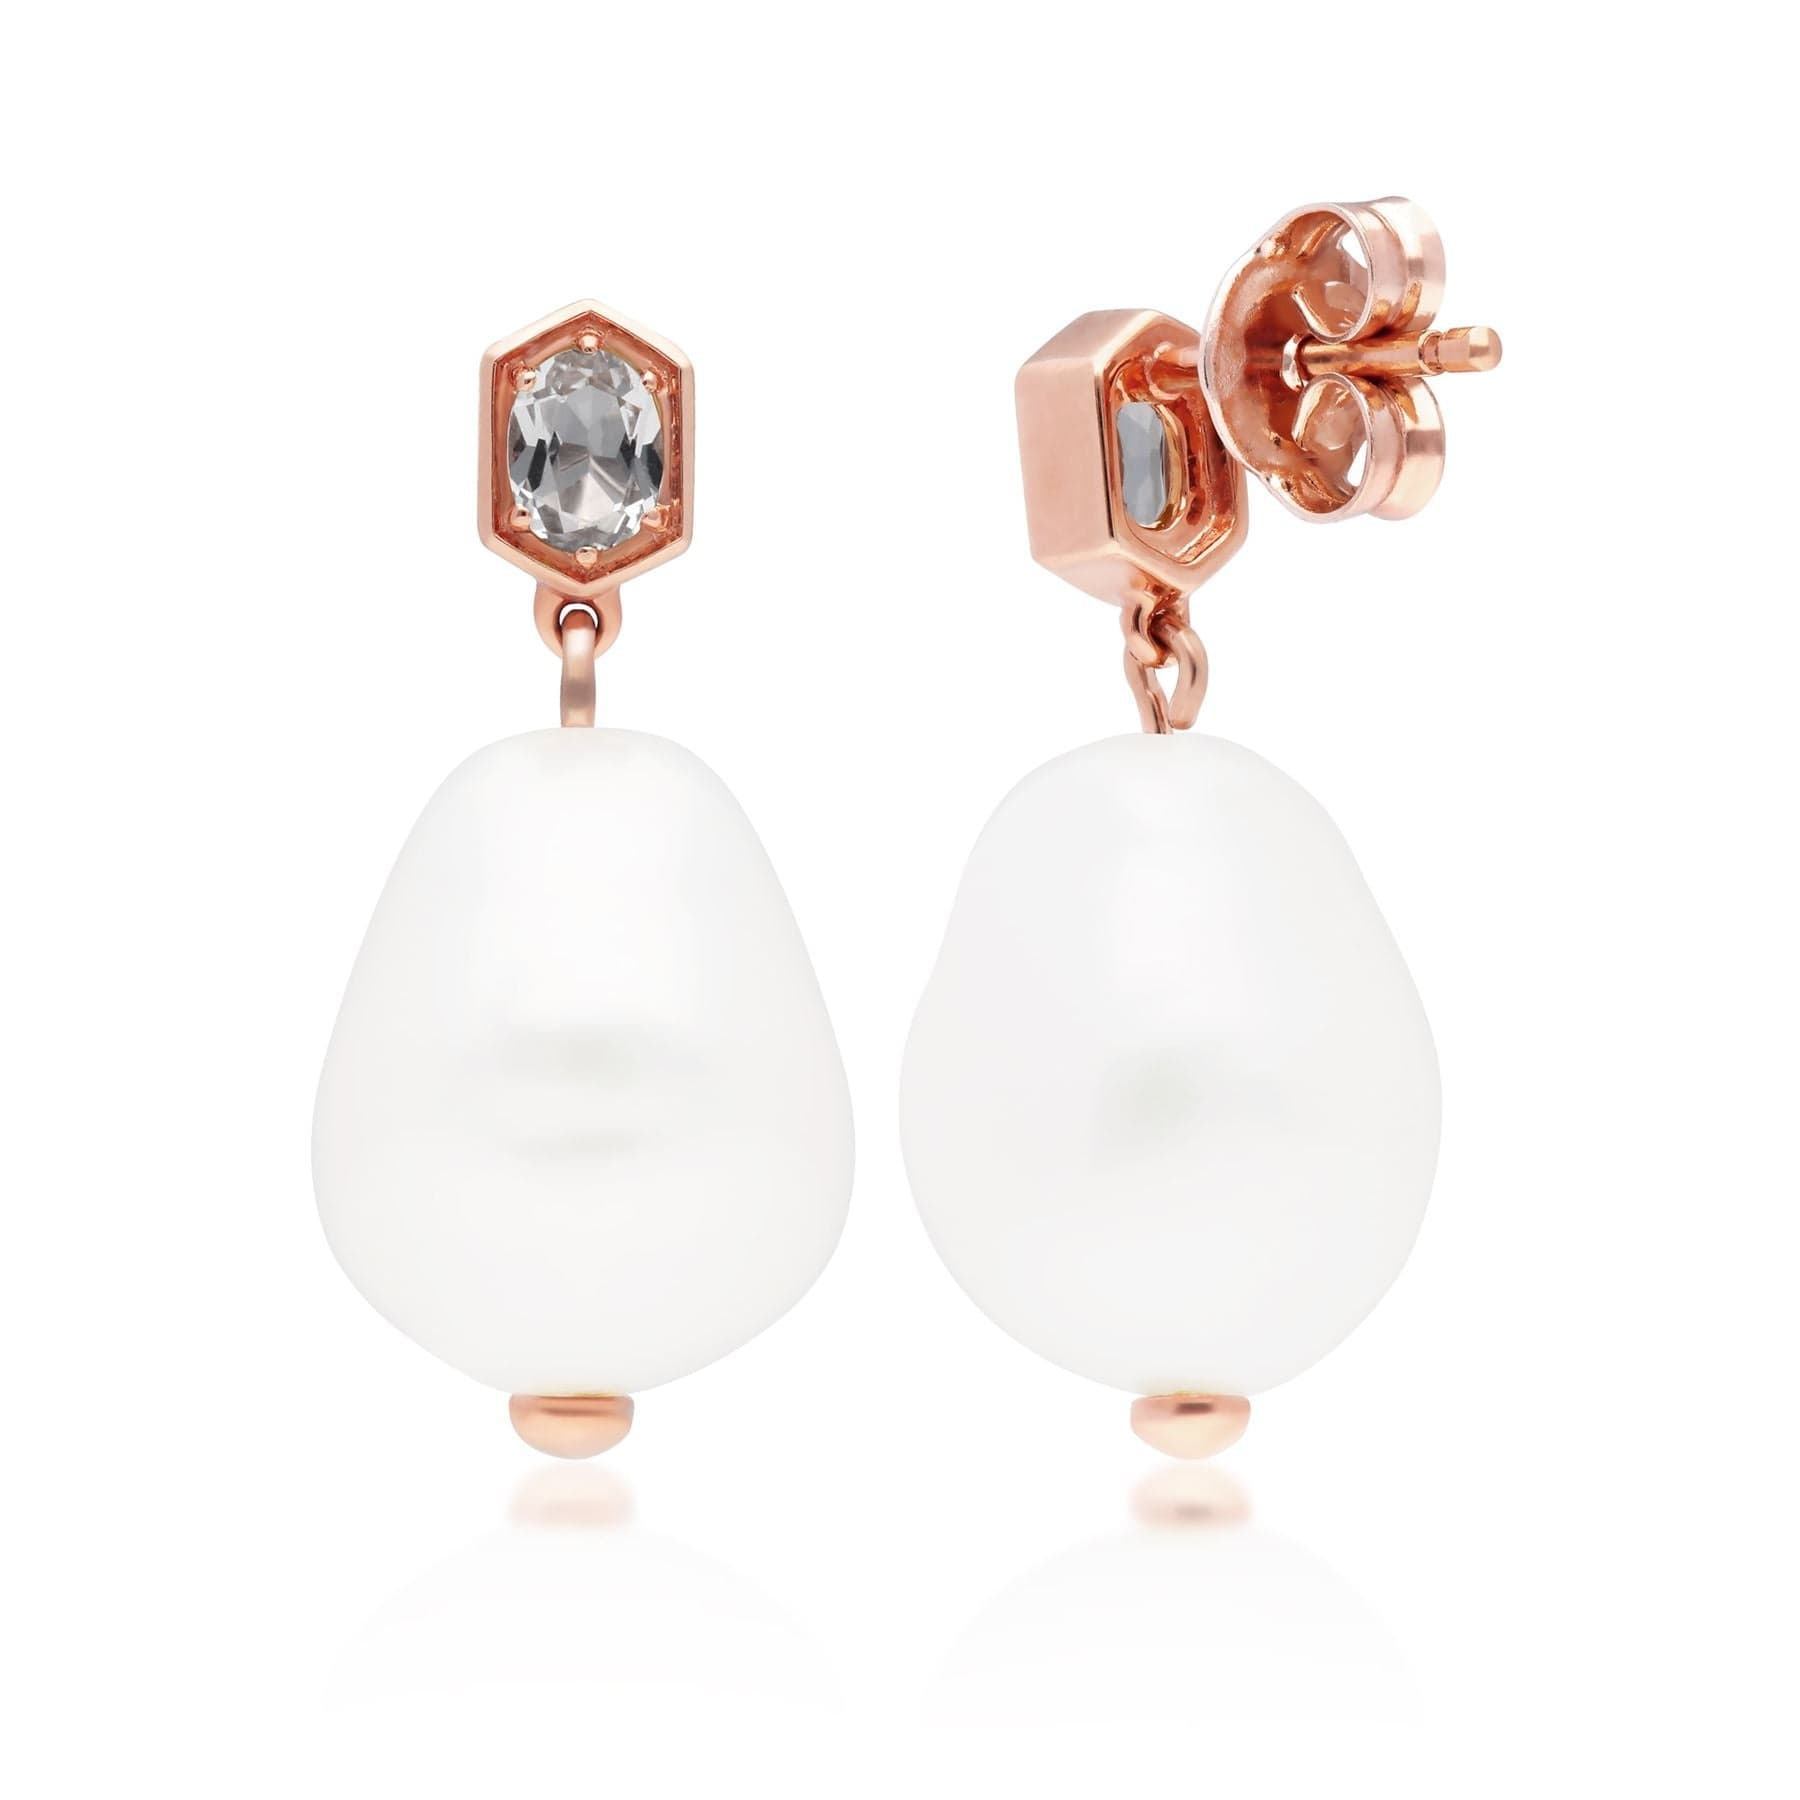 Modern Baroque Pearl & White Topaz Drop Earrings in Rose Gold Plated Silver - Gemondo